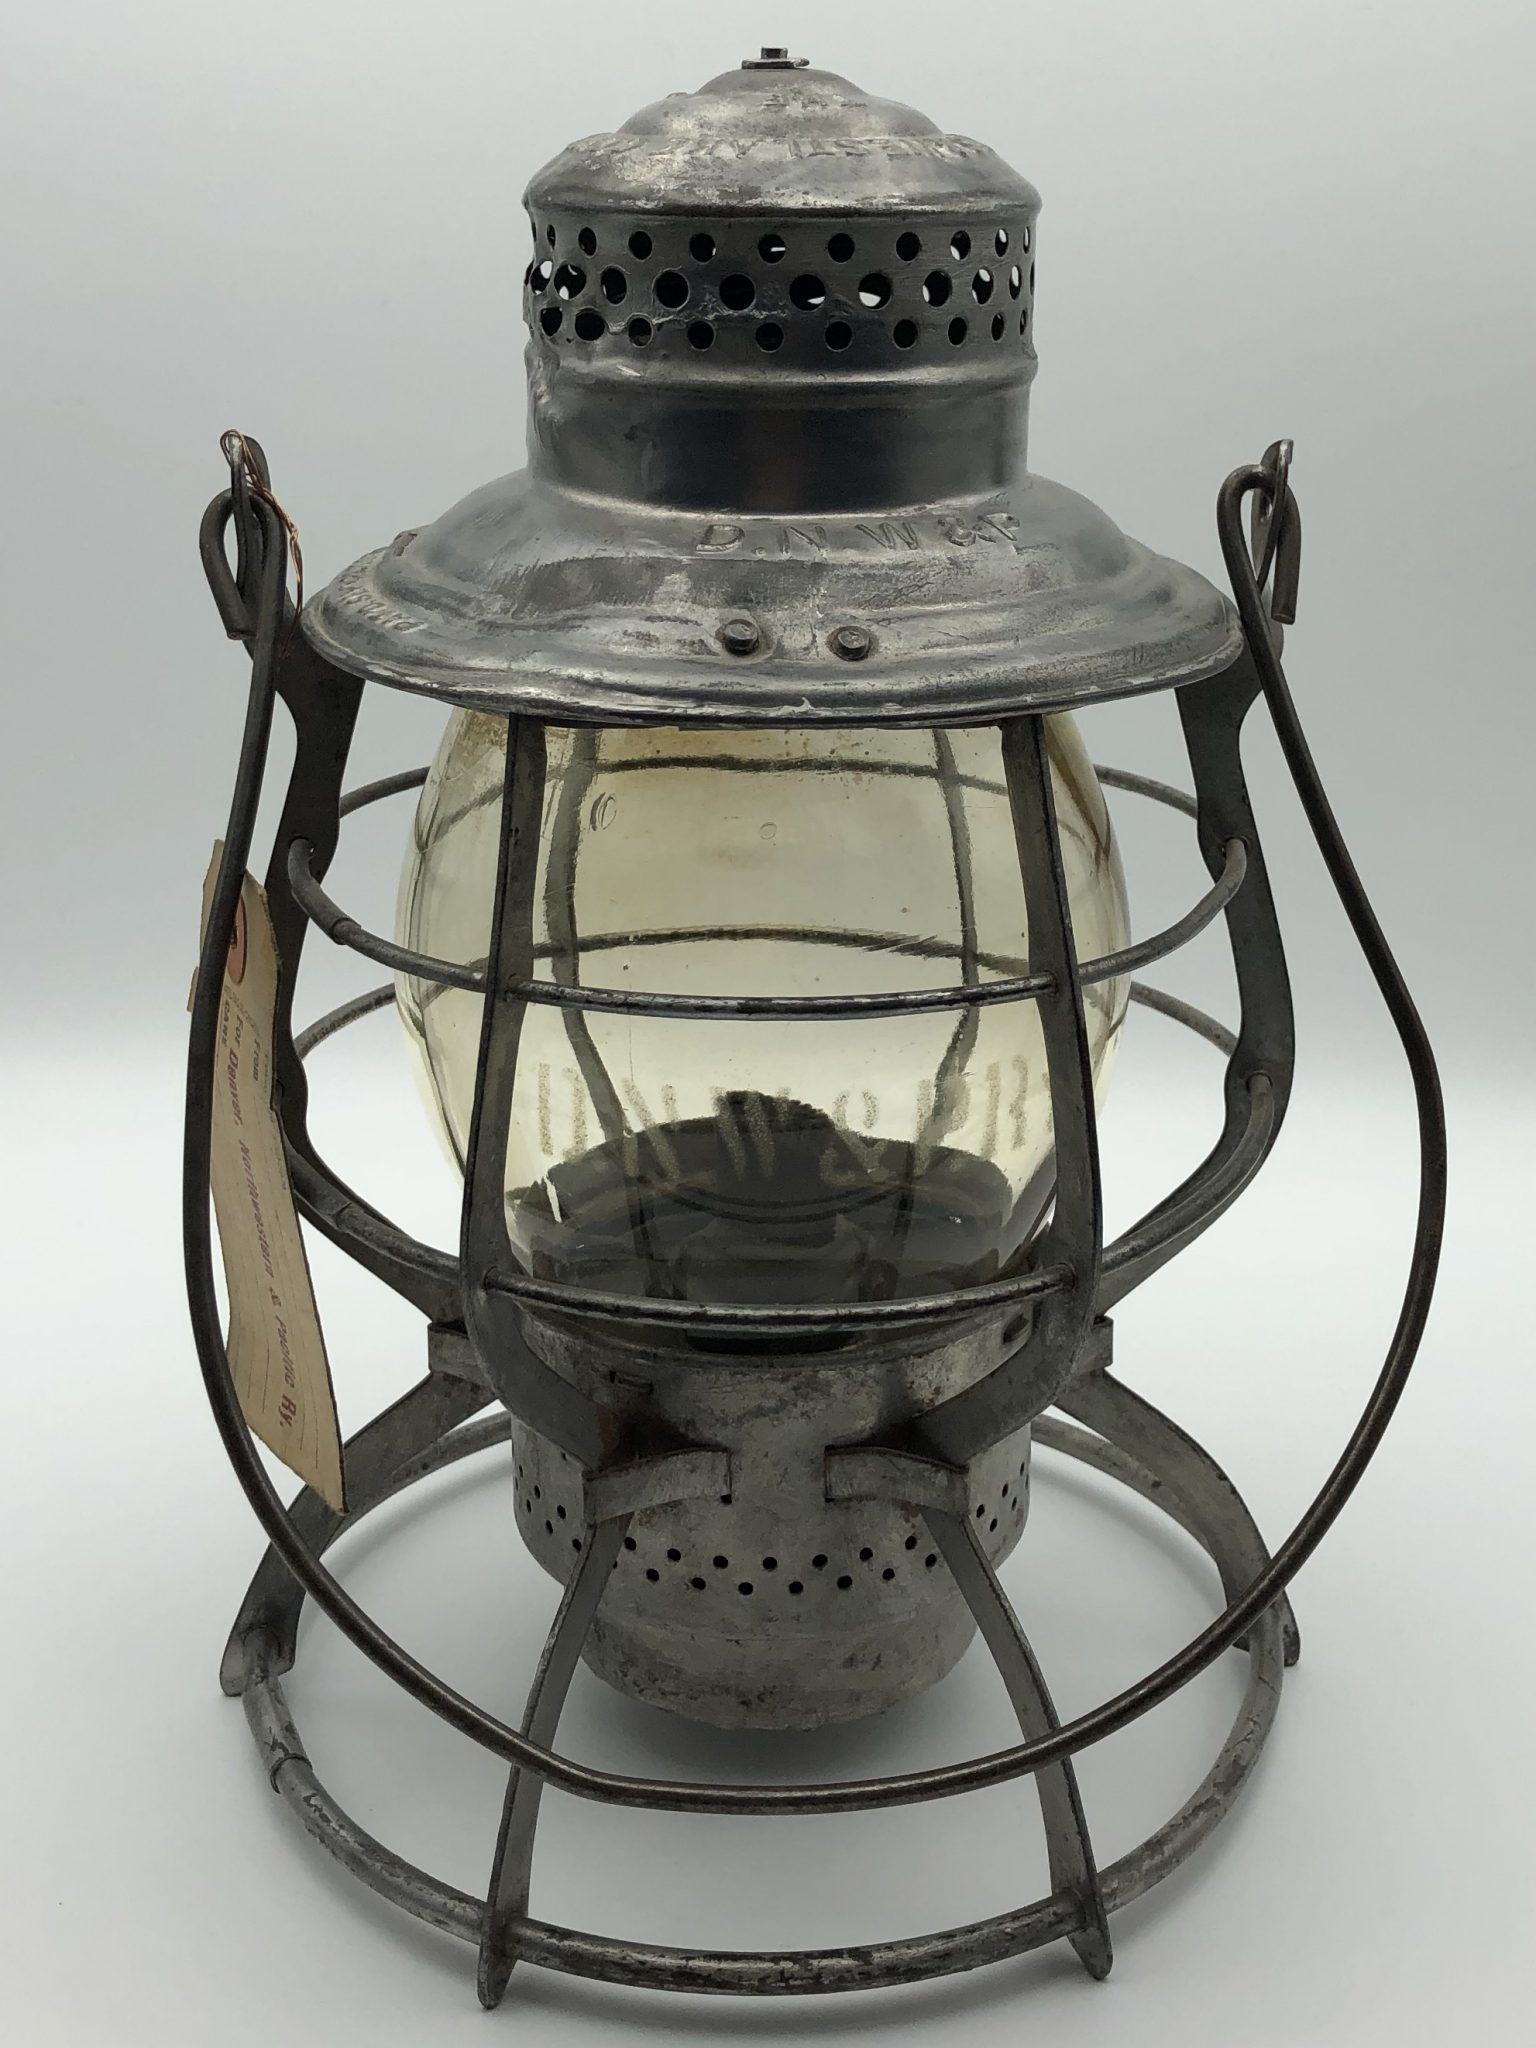 DNW&P Railroad Lantern